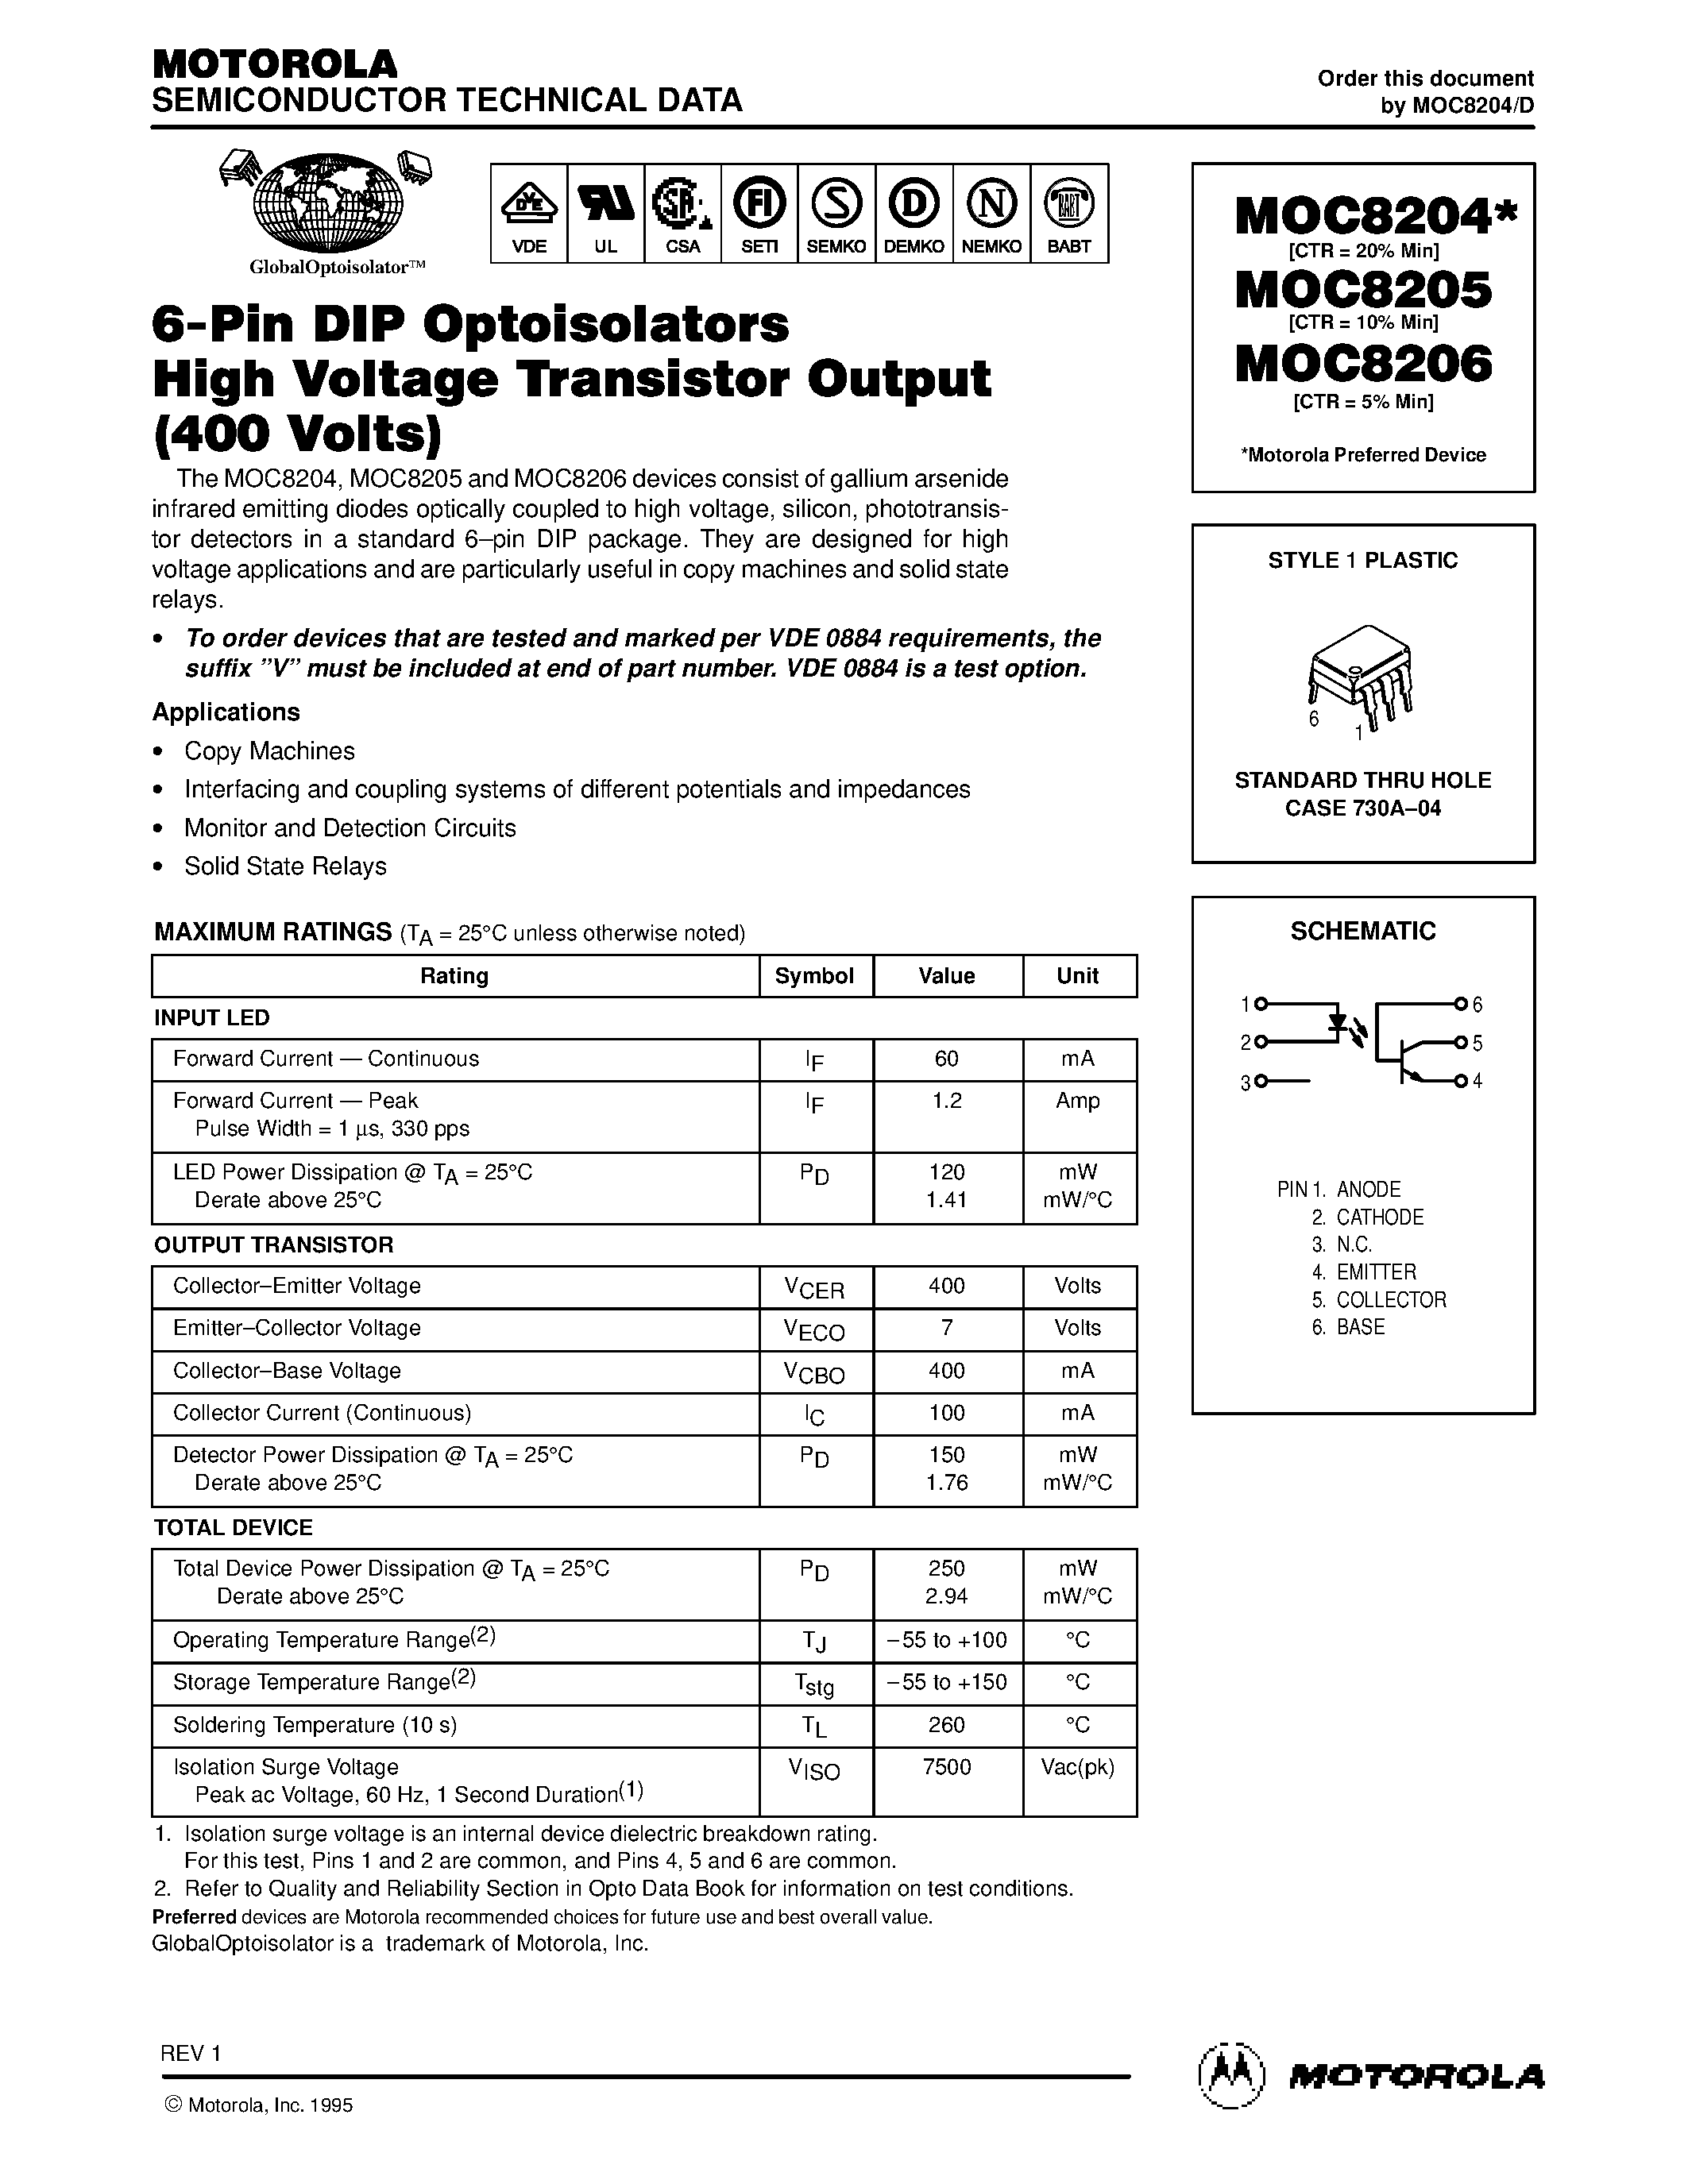 Datasheet MOC8204 - (MOC8204 / MOC8205 / MOC8206) 6-Pin DIP Optoisolators High Voltage Transistor Output(400 Volts) page 1